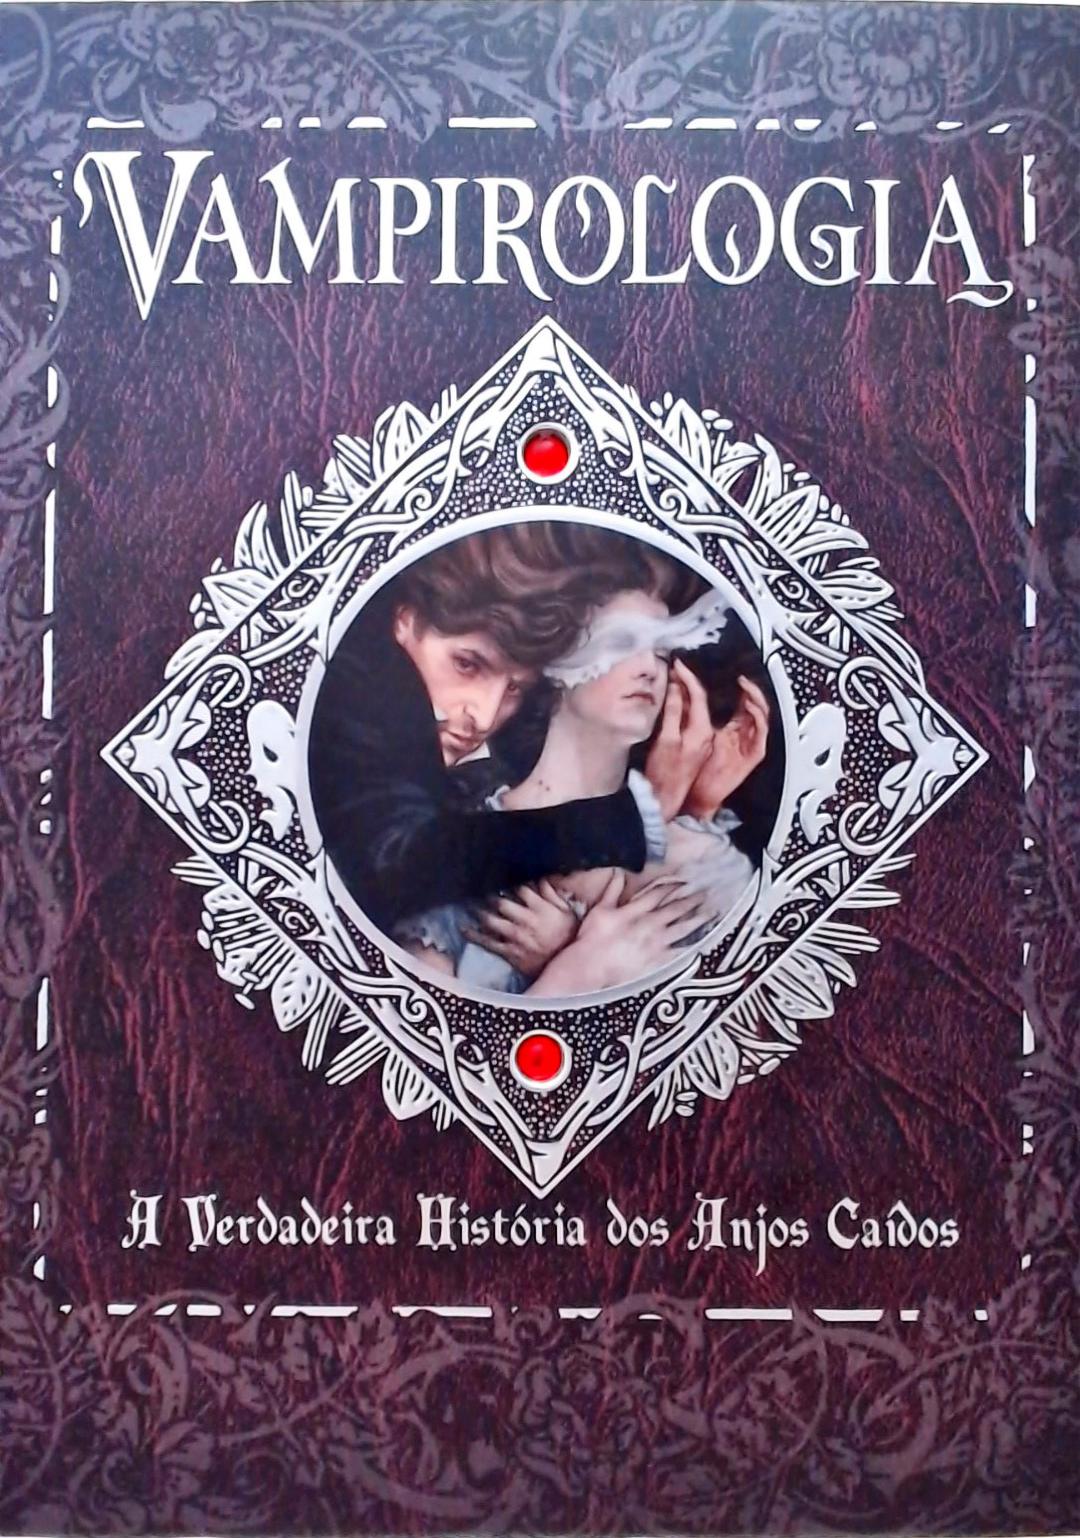 Vampirologia